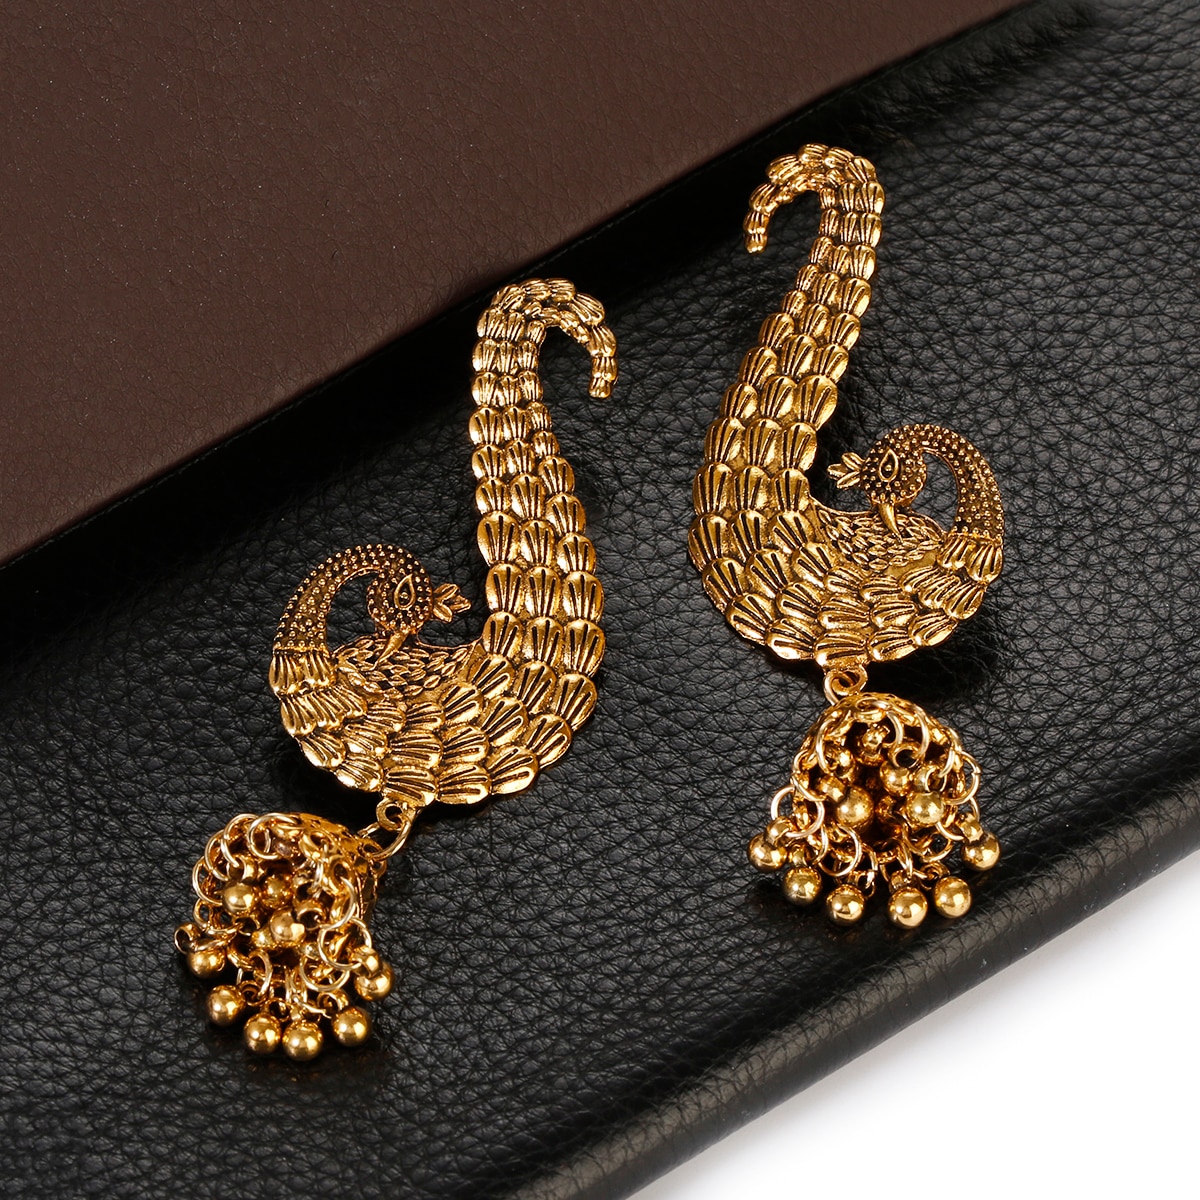 Retro-Luxury-Peacock-Indian-Earrings-For-Women-Ethnic-Gold-Color-Earrings-Piercing-Wedding-Jewelry-A-3256803821359707-3